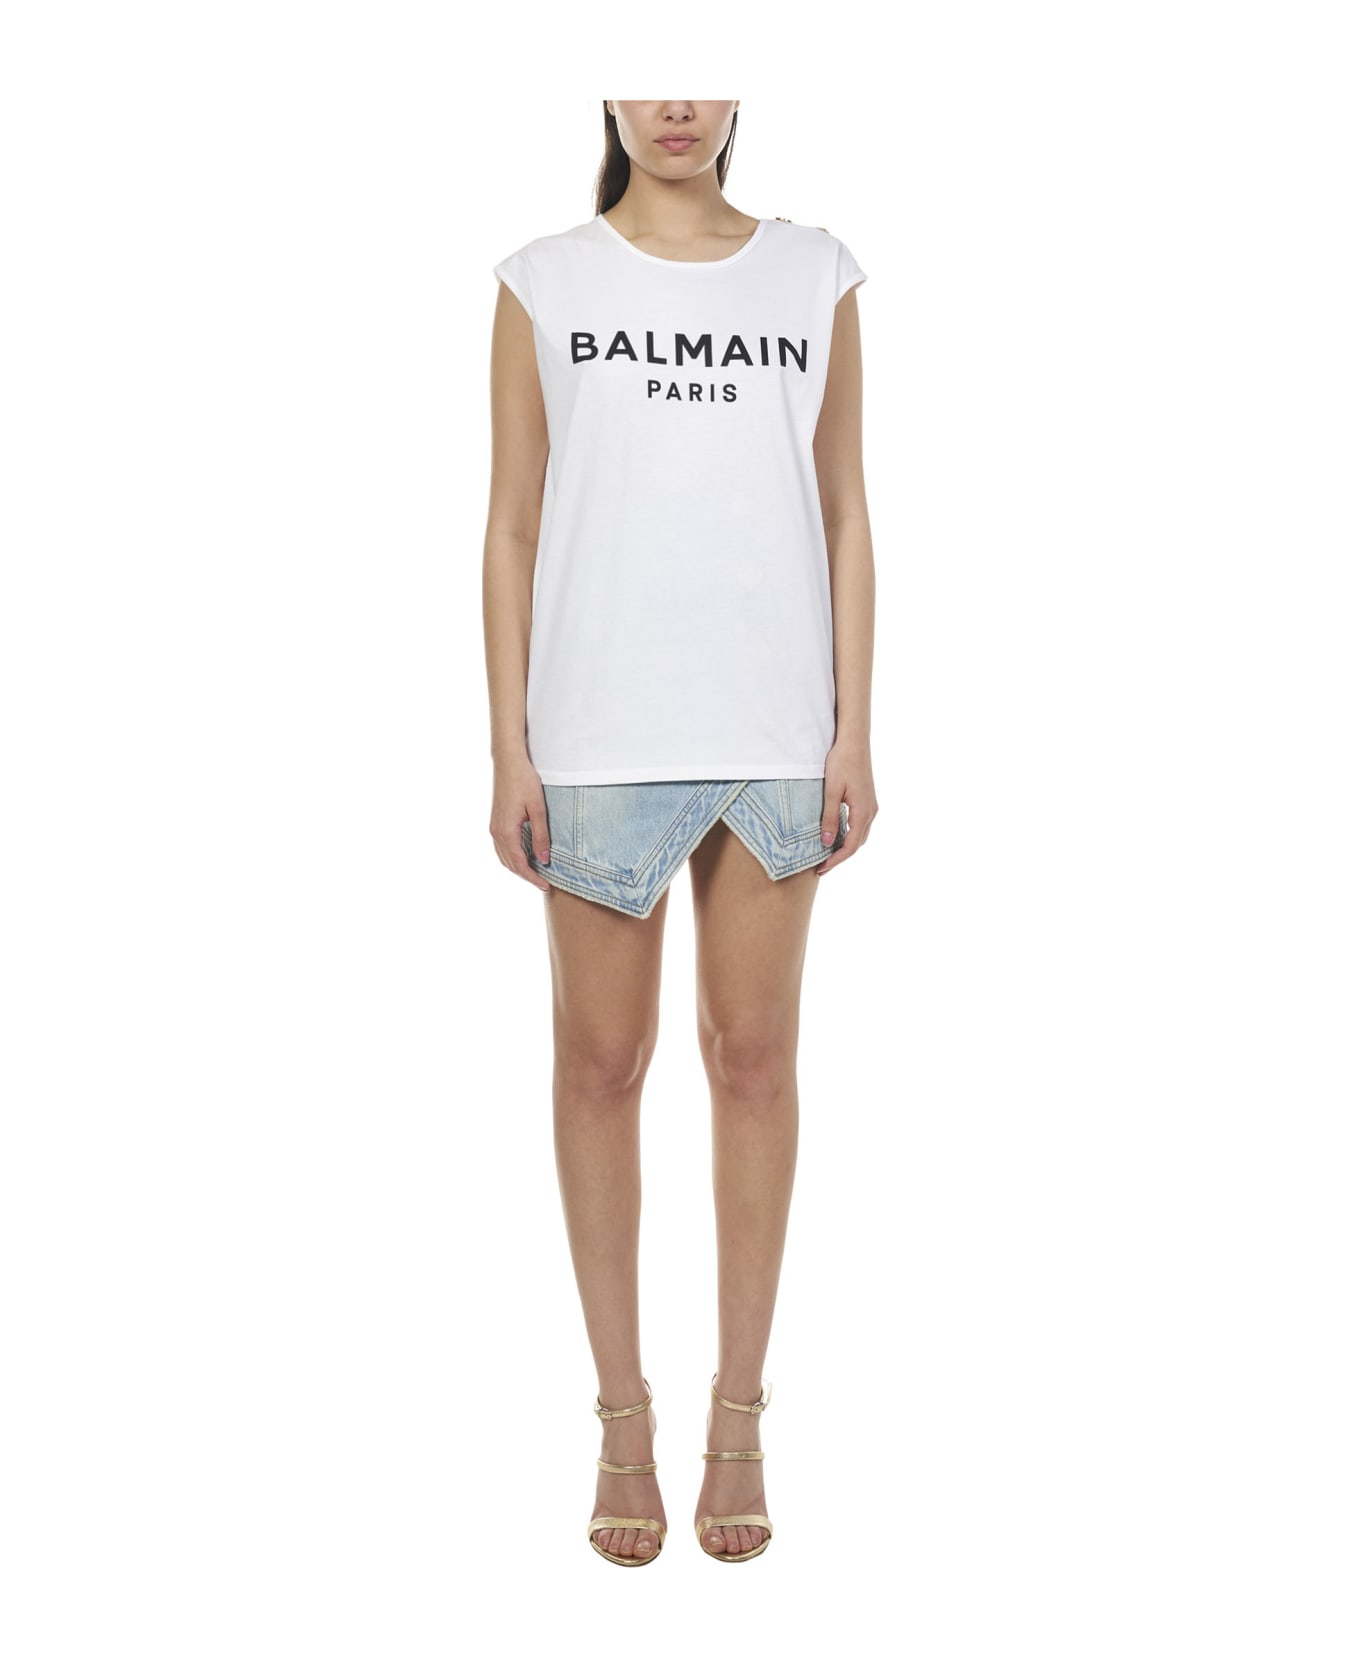 Balmain T-shirt - Bianco/nero